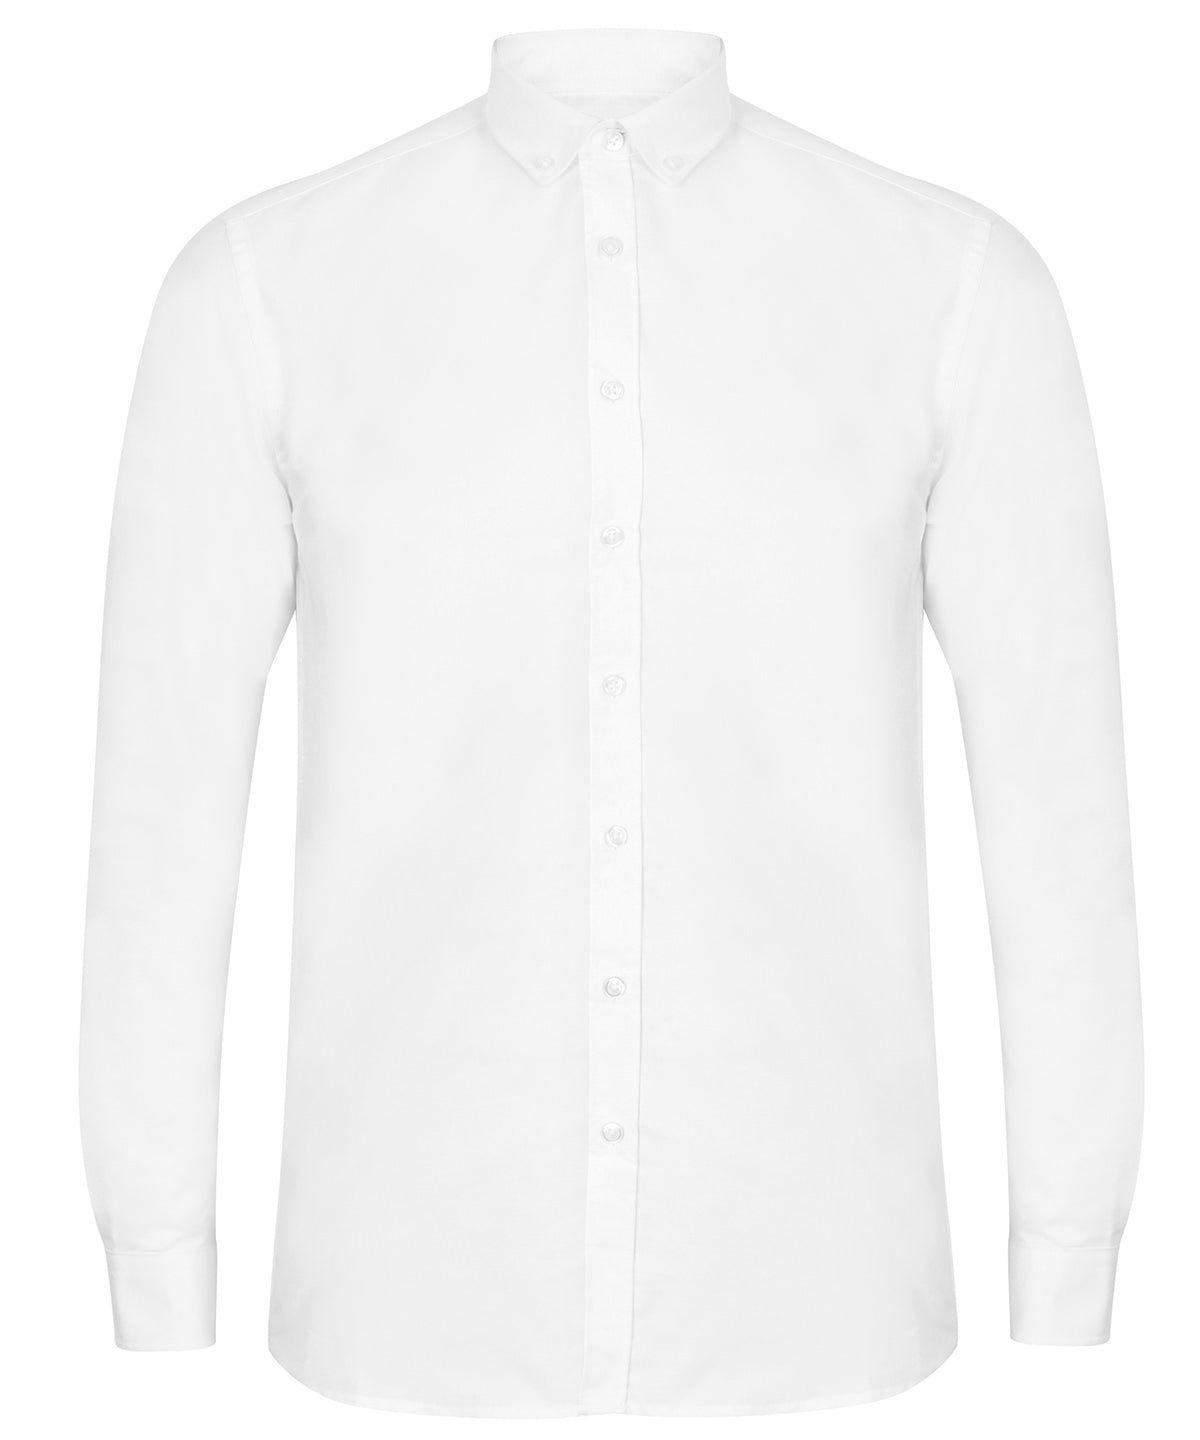 Bolir - Modern Long Sleeve Oxford Shirt